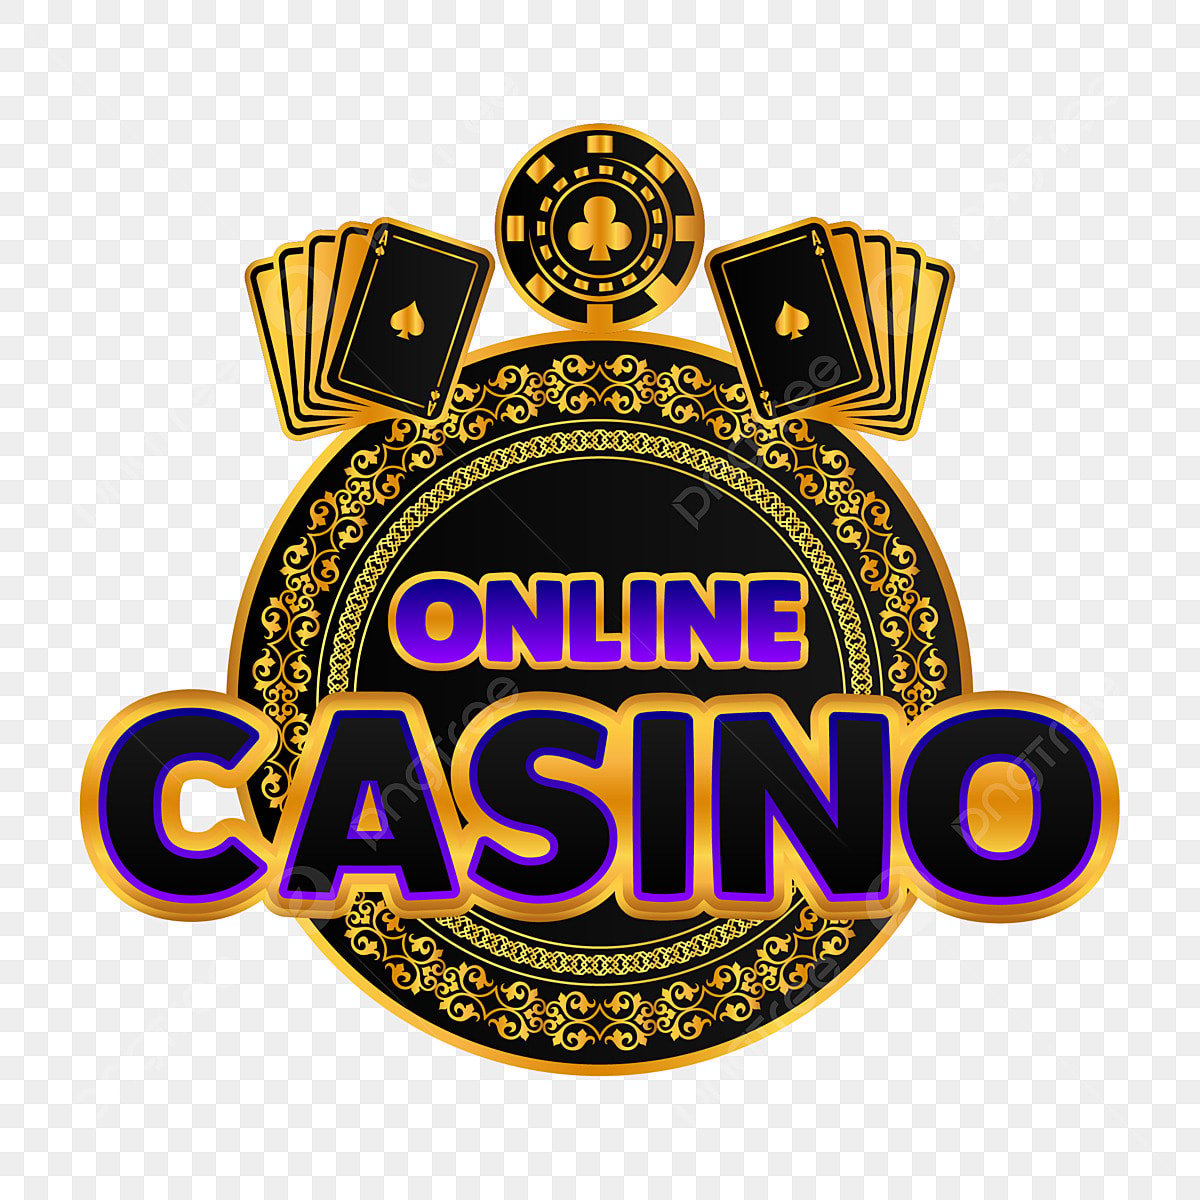 The Top 5 most popular okbet casino login online casino games in the Philippines